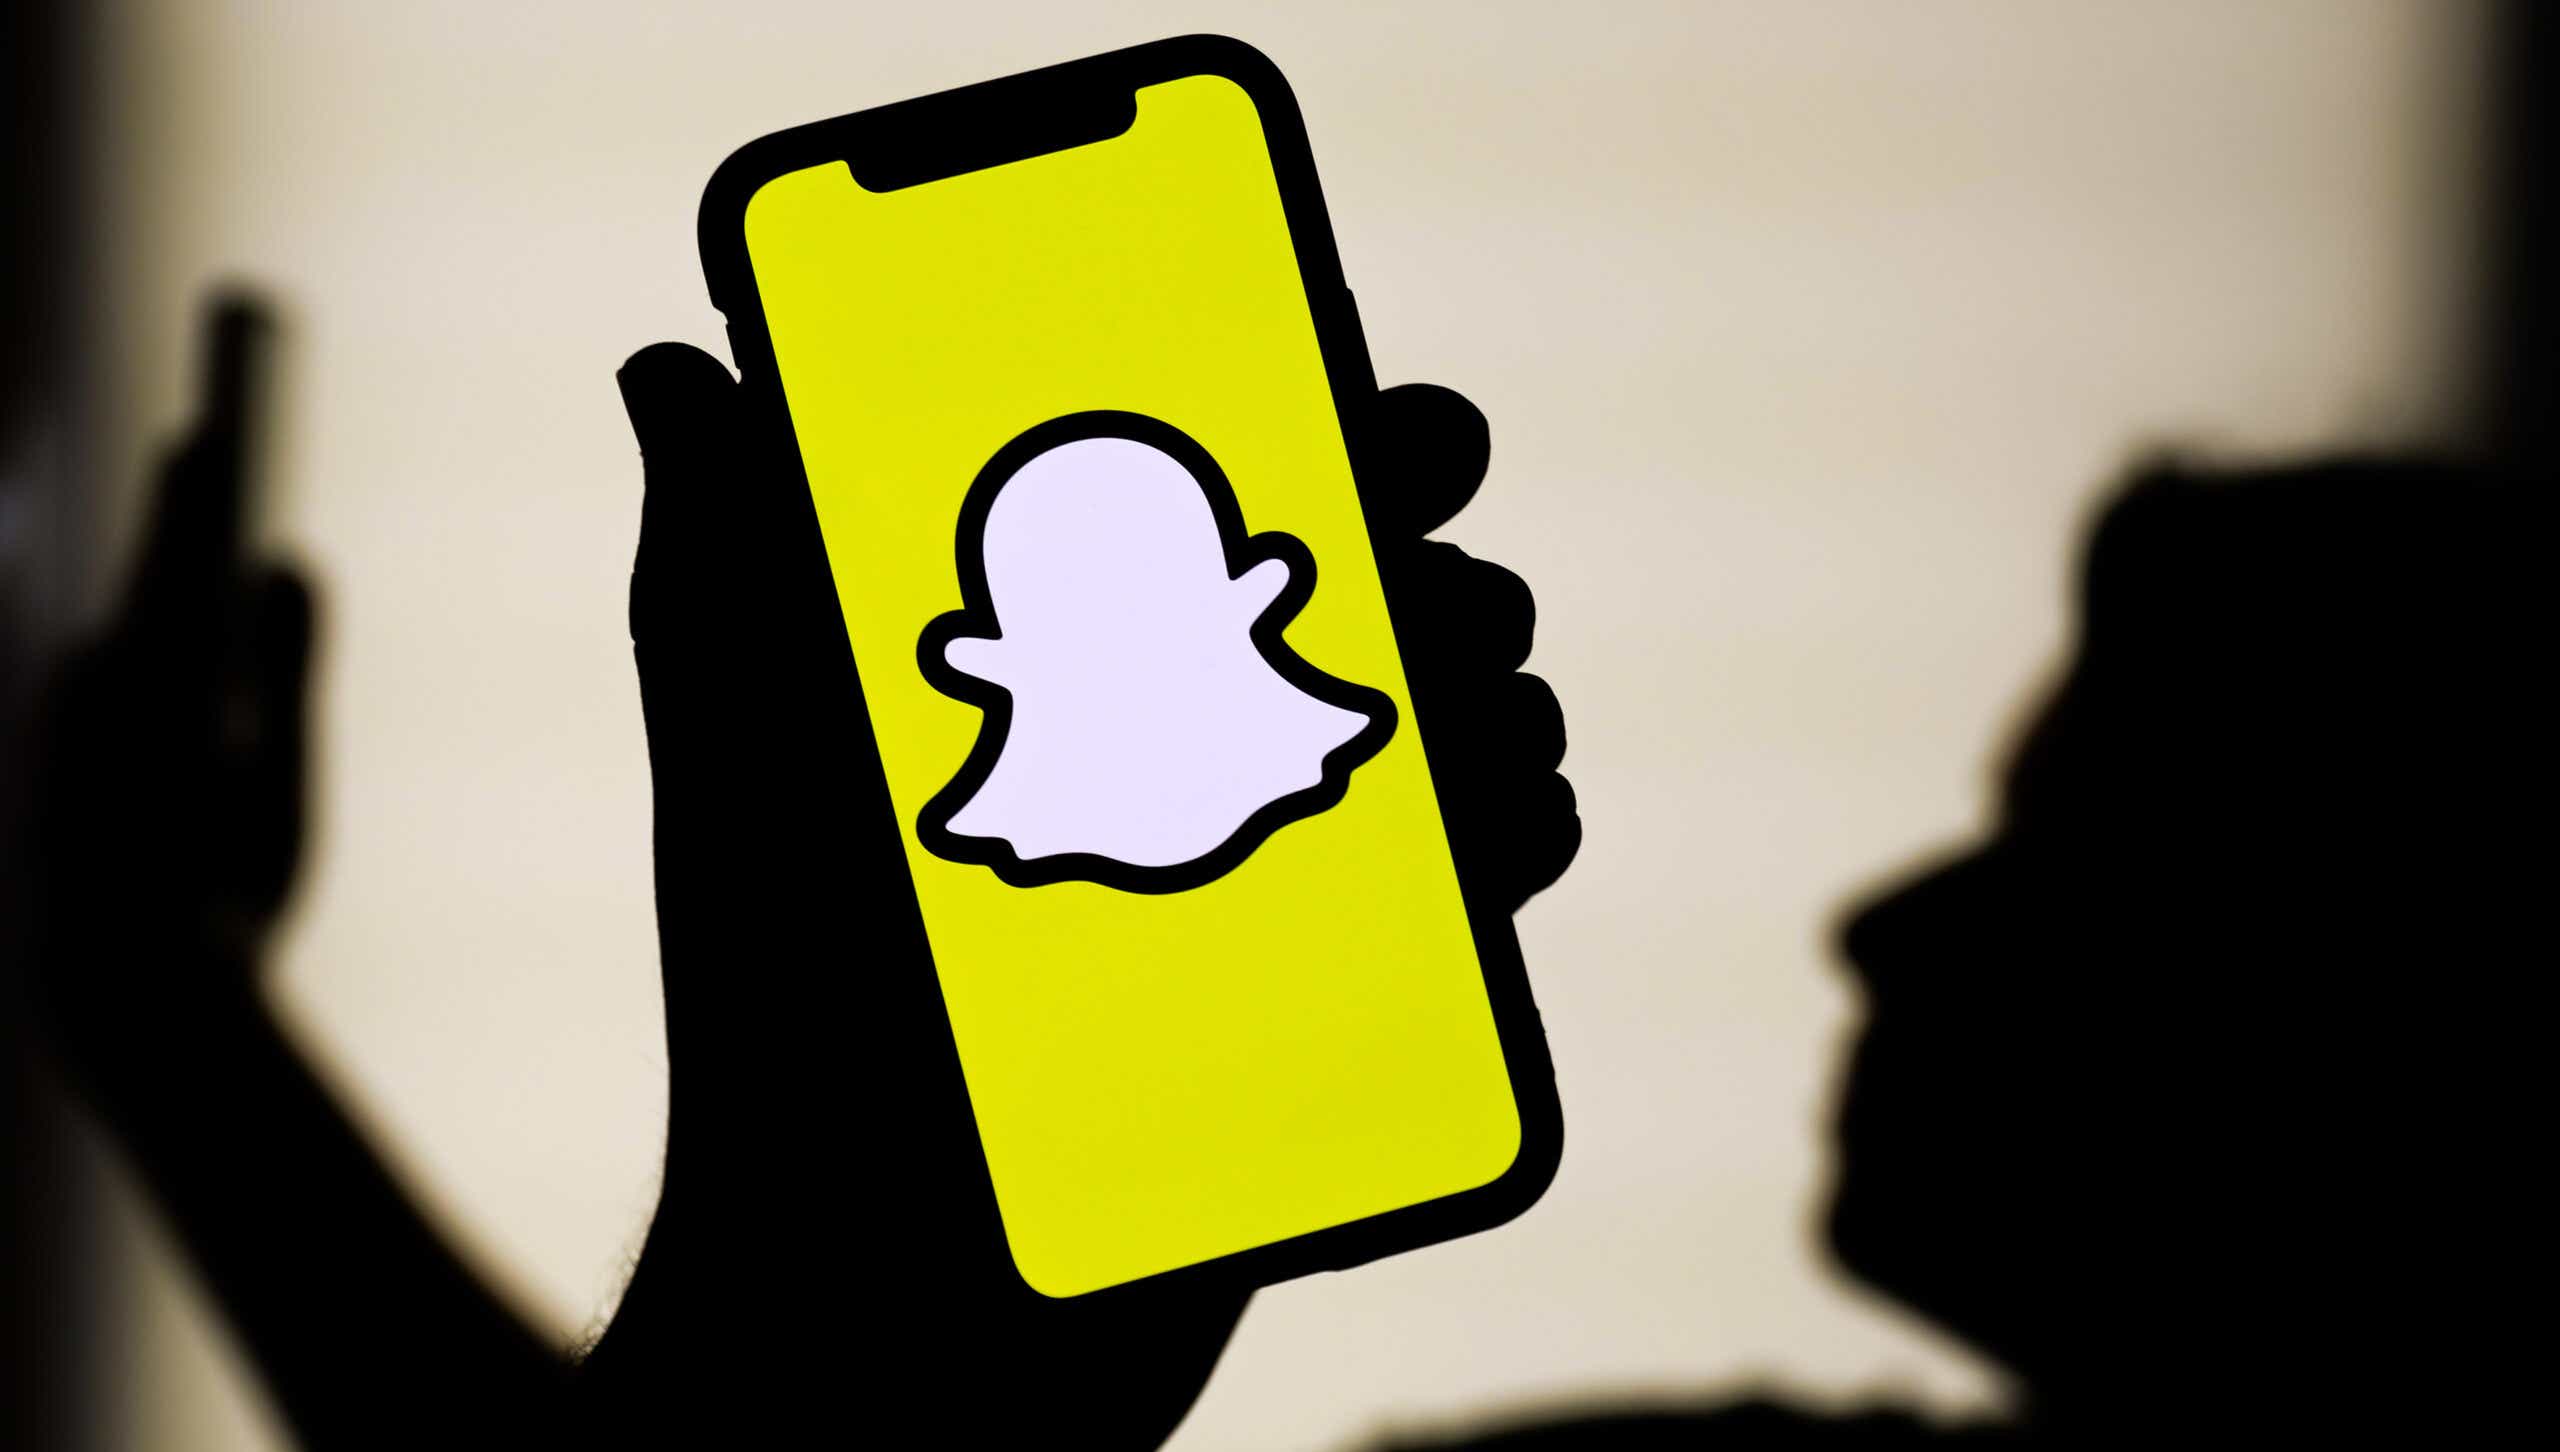 Phone displaying a snapchat logo